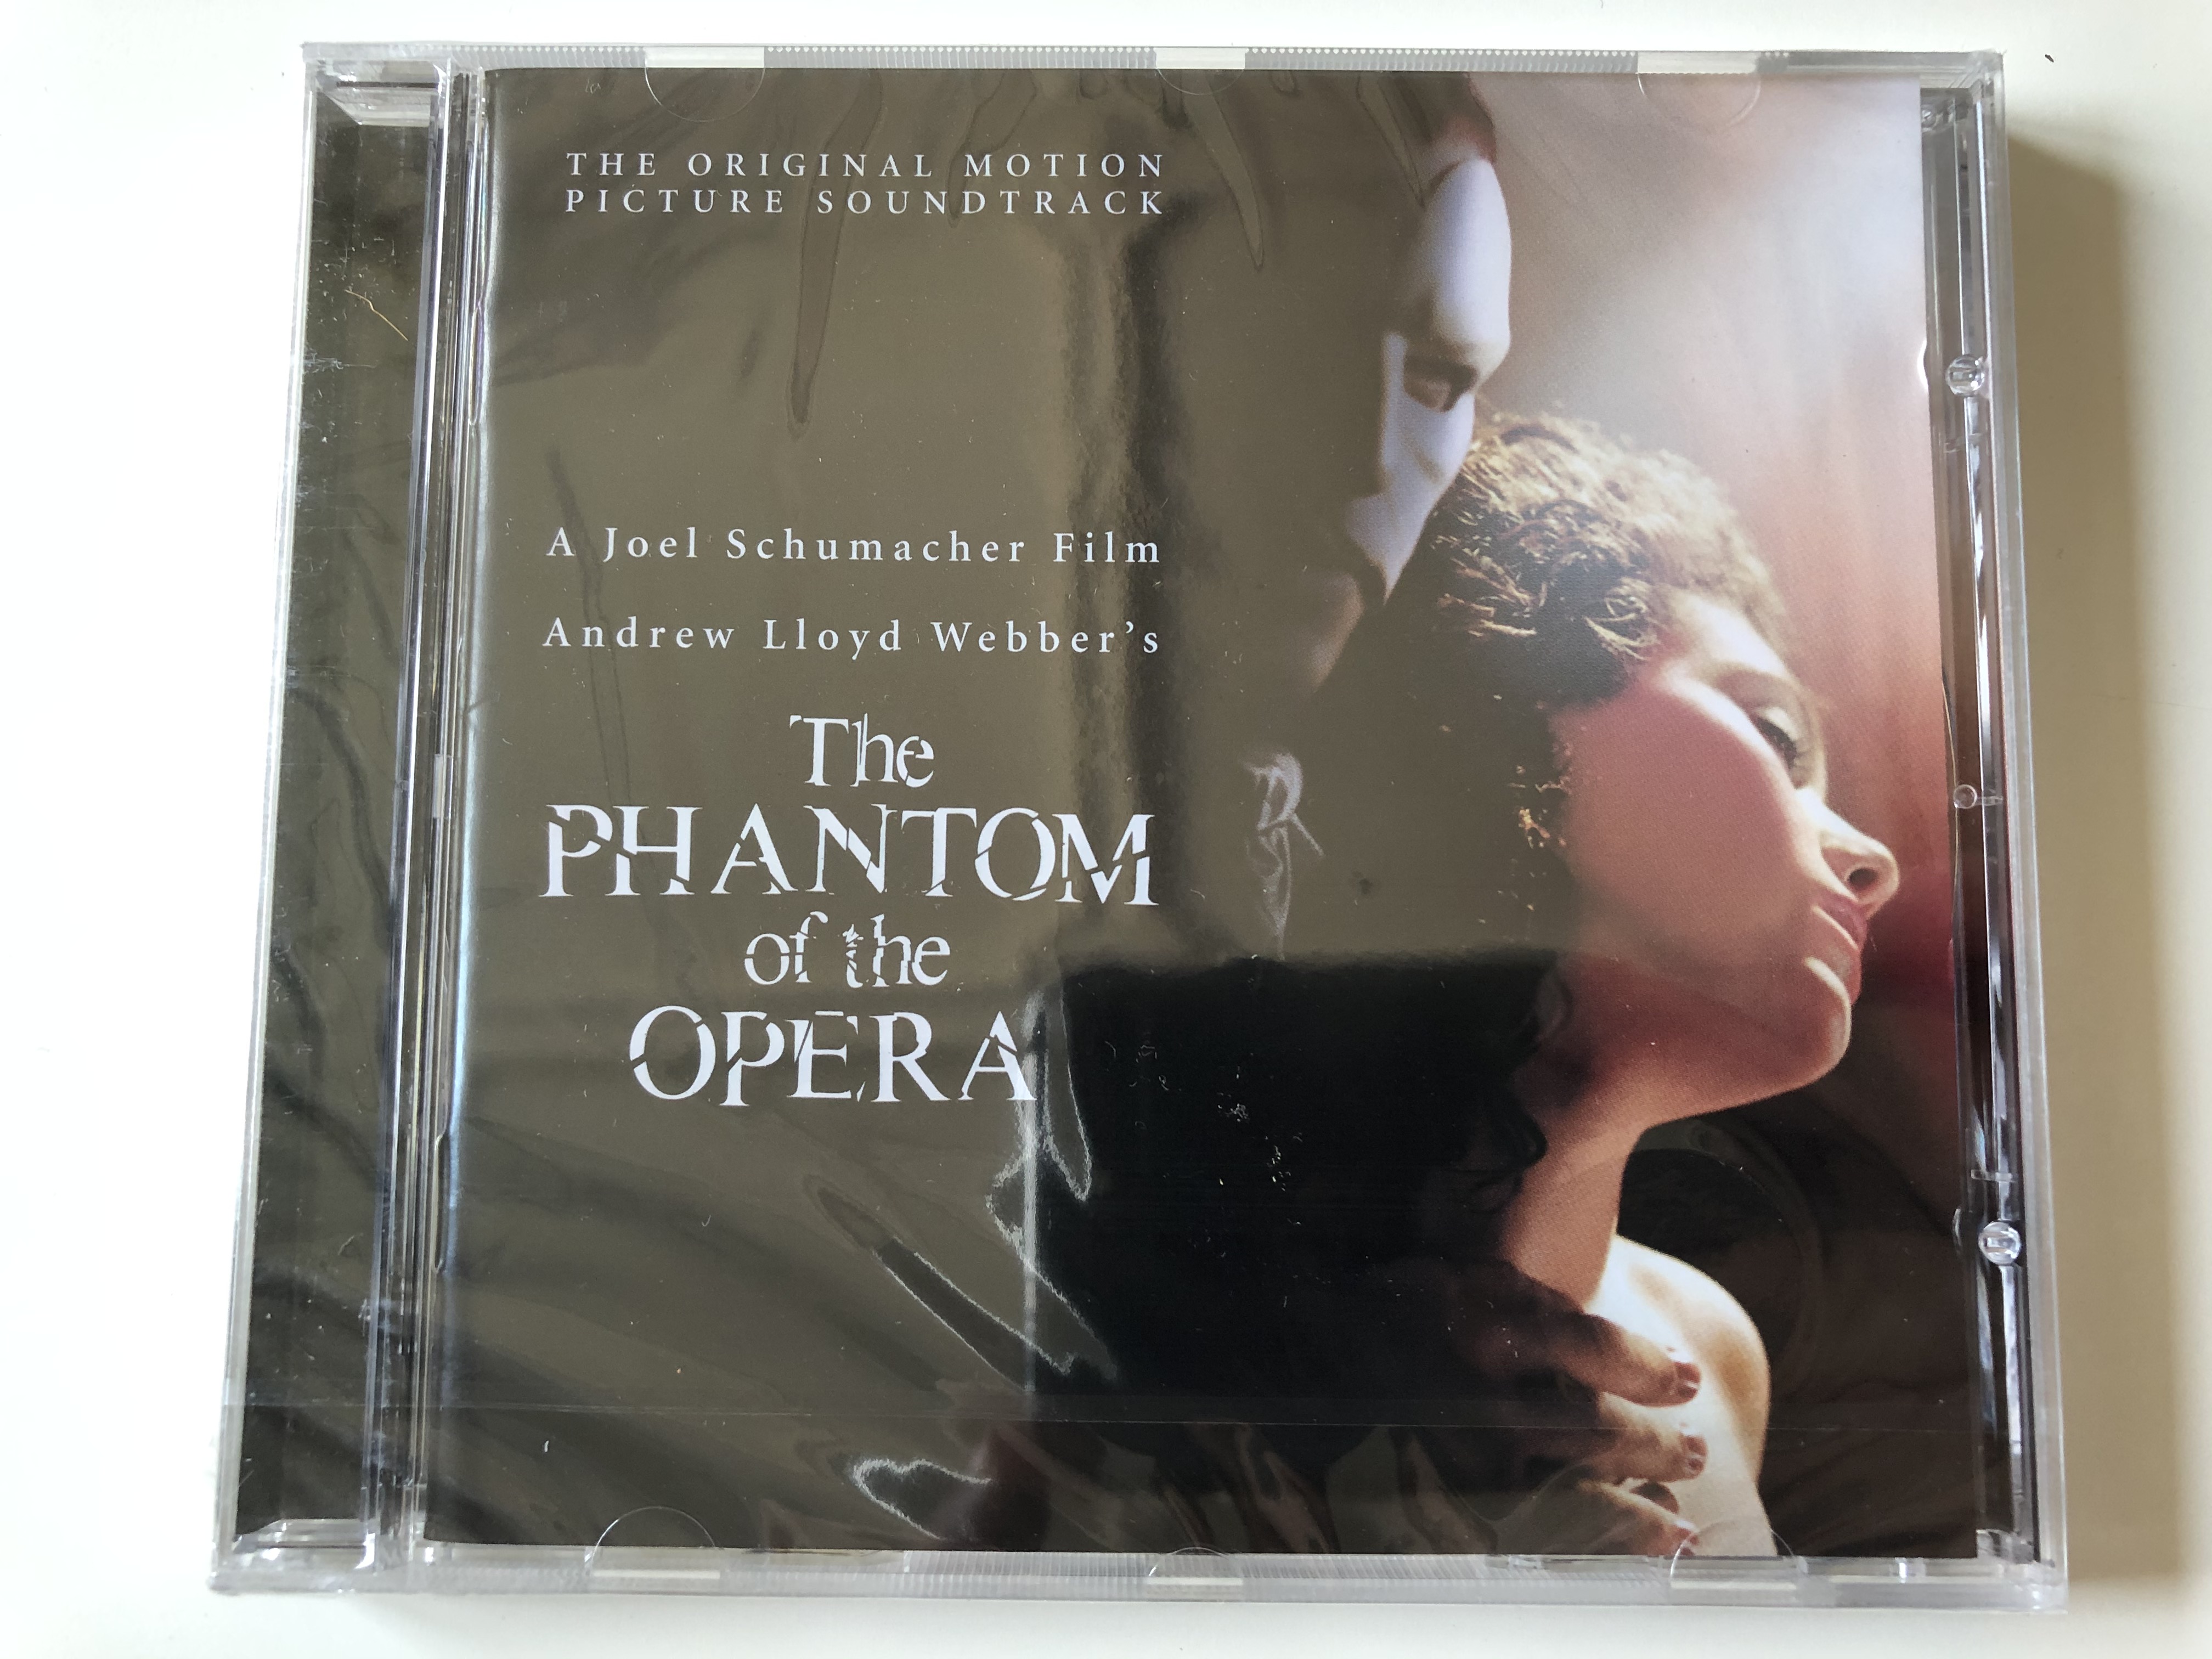 the-original-motion-picture-soundtrack-a-joel-schumacher-film-andrew-lloyd-webber-s-the-phantom-of-the-opera-sony-music-soundtrax-audio-cd-2004-sk-93521-1-.jpg